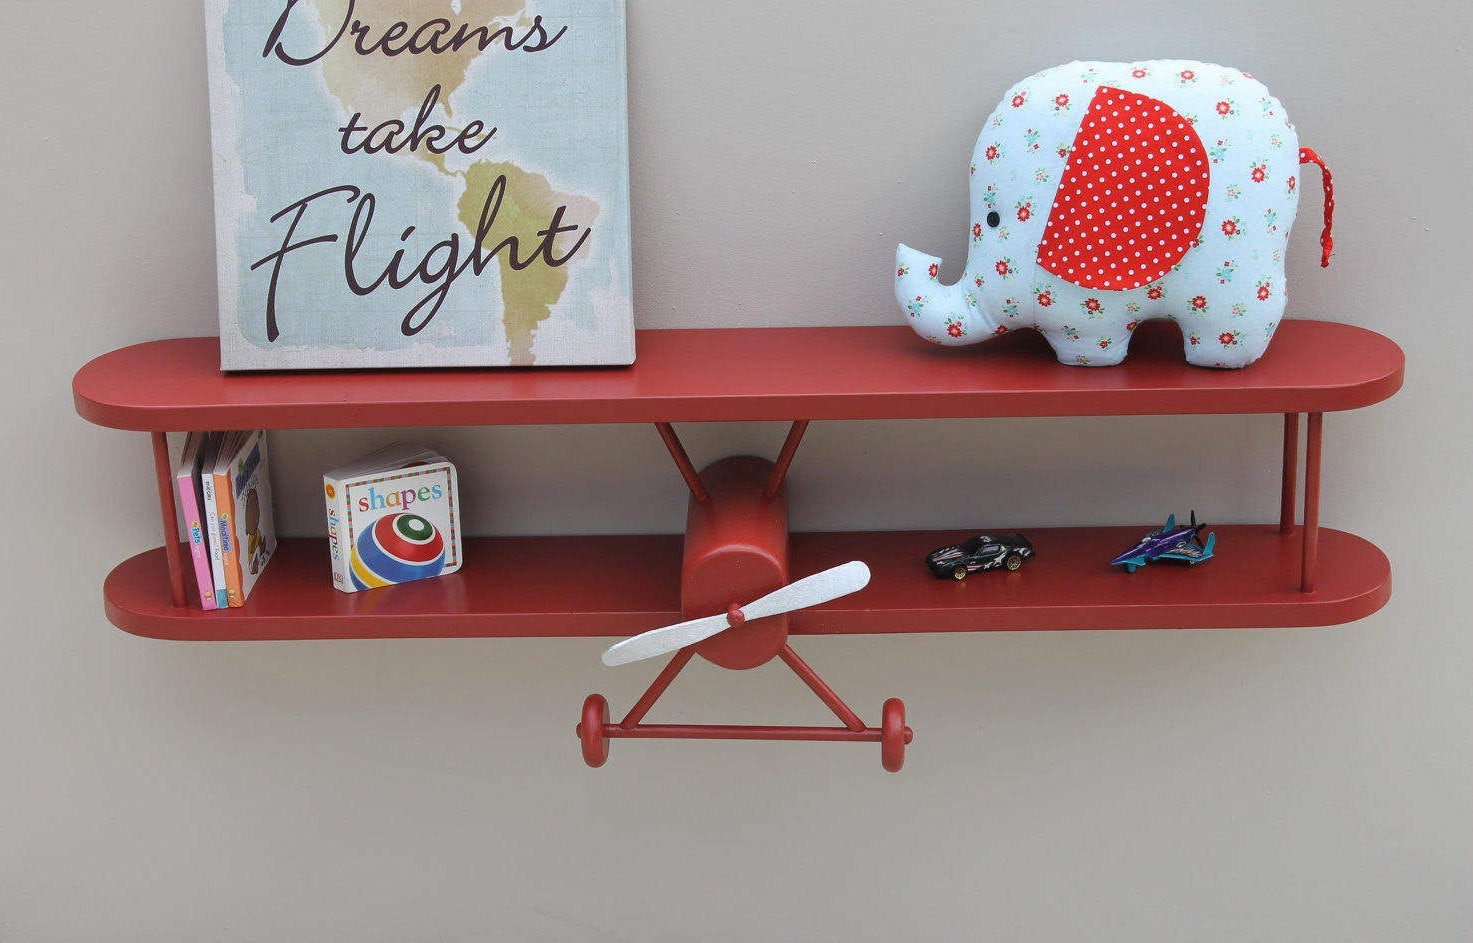 Airplane Baby Room Decor
 Airplane Shelf 3 ft long plane pilot aircraft decor Baby